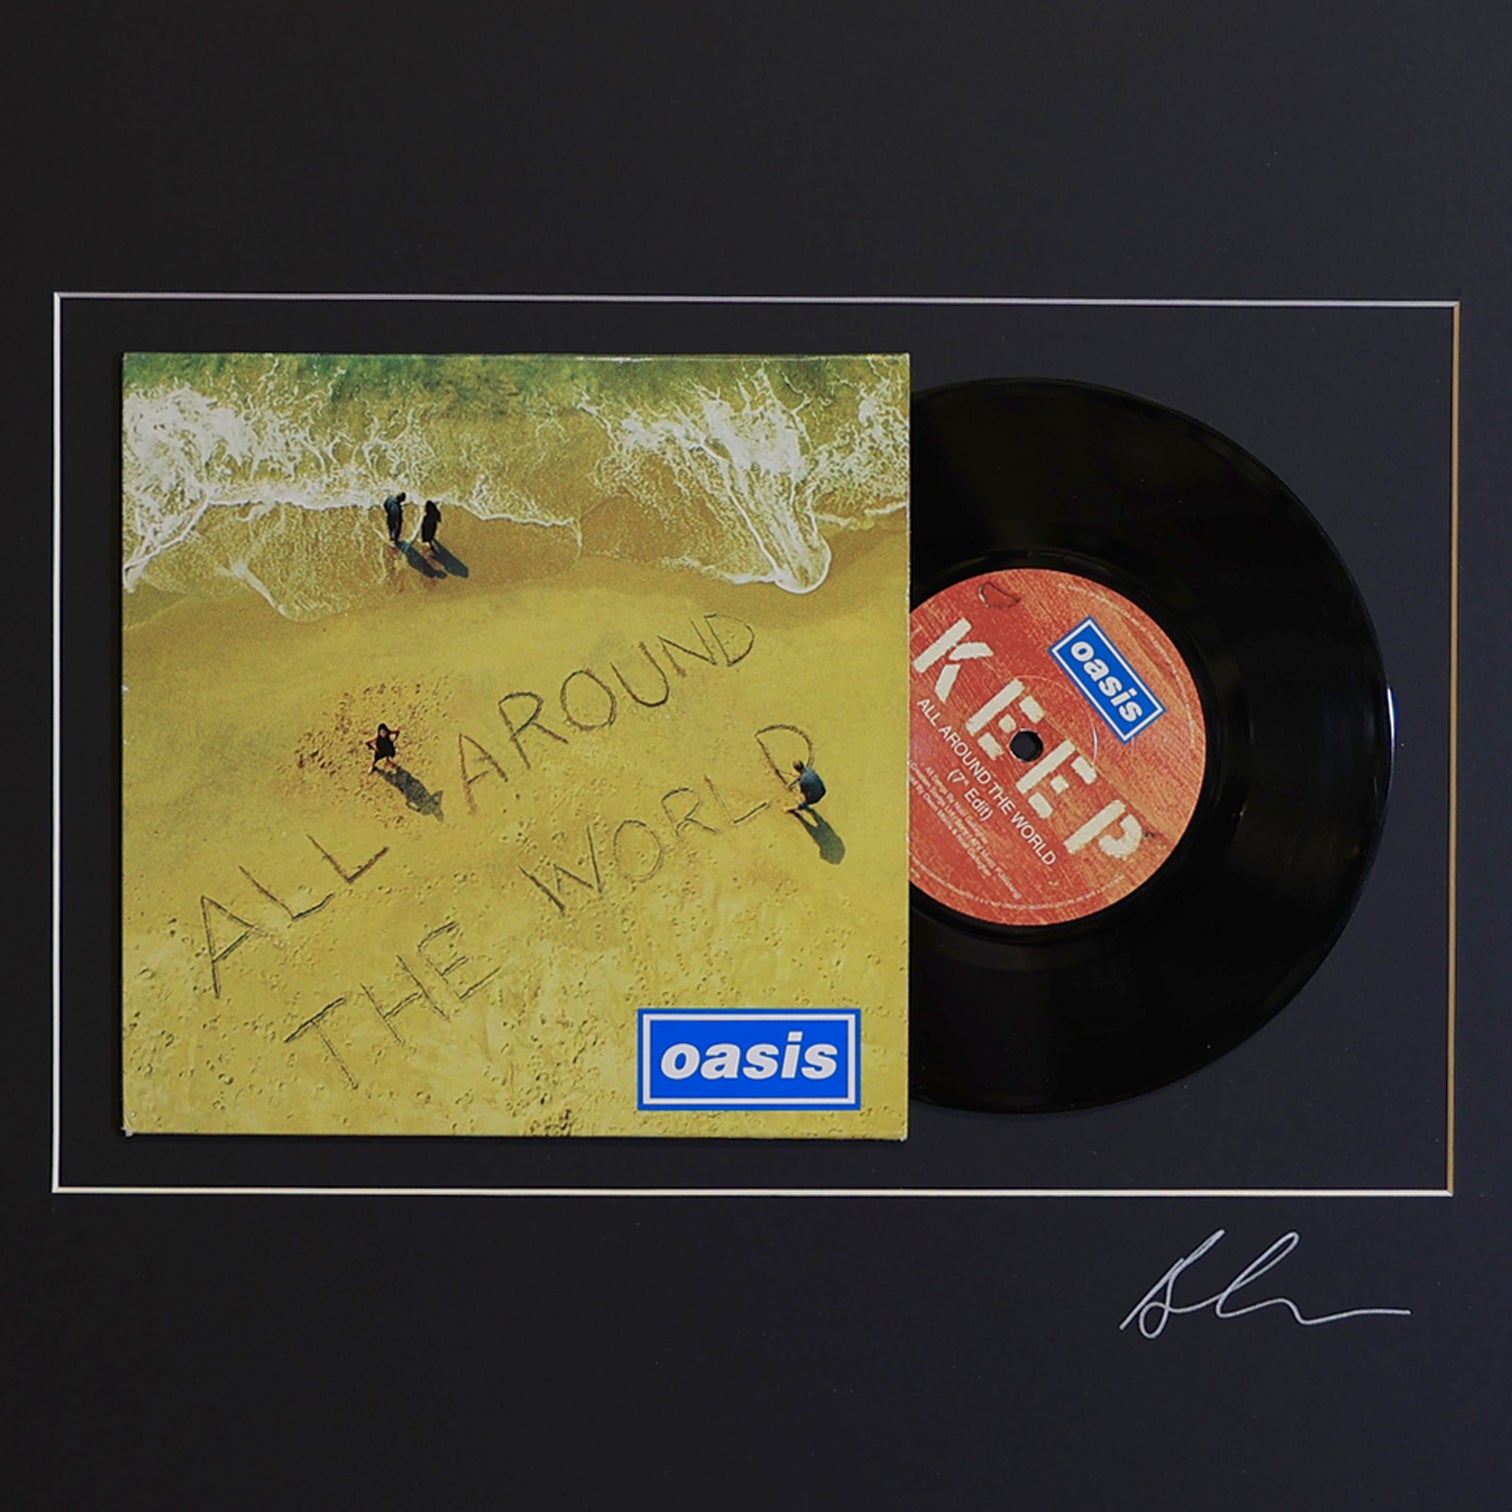 Oasis - All Around The World - Framed 7 inch Vinyl - New Item